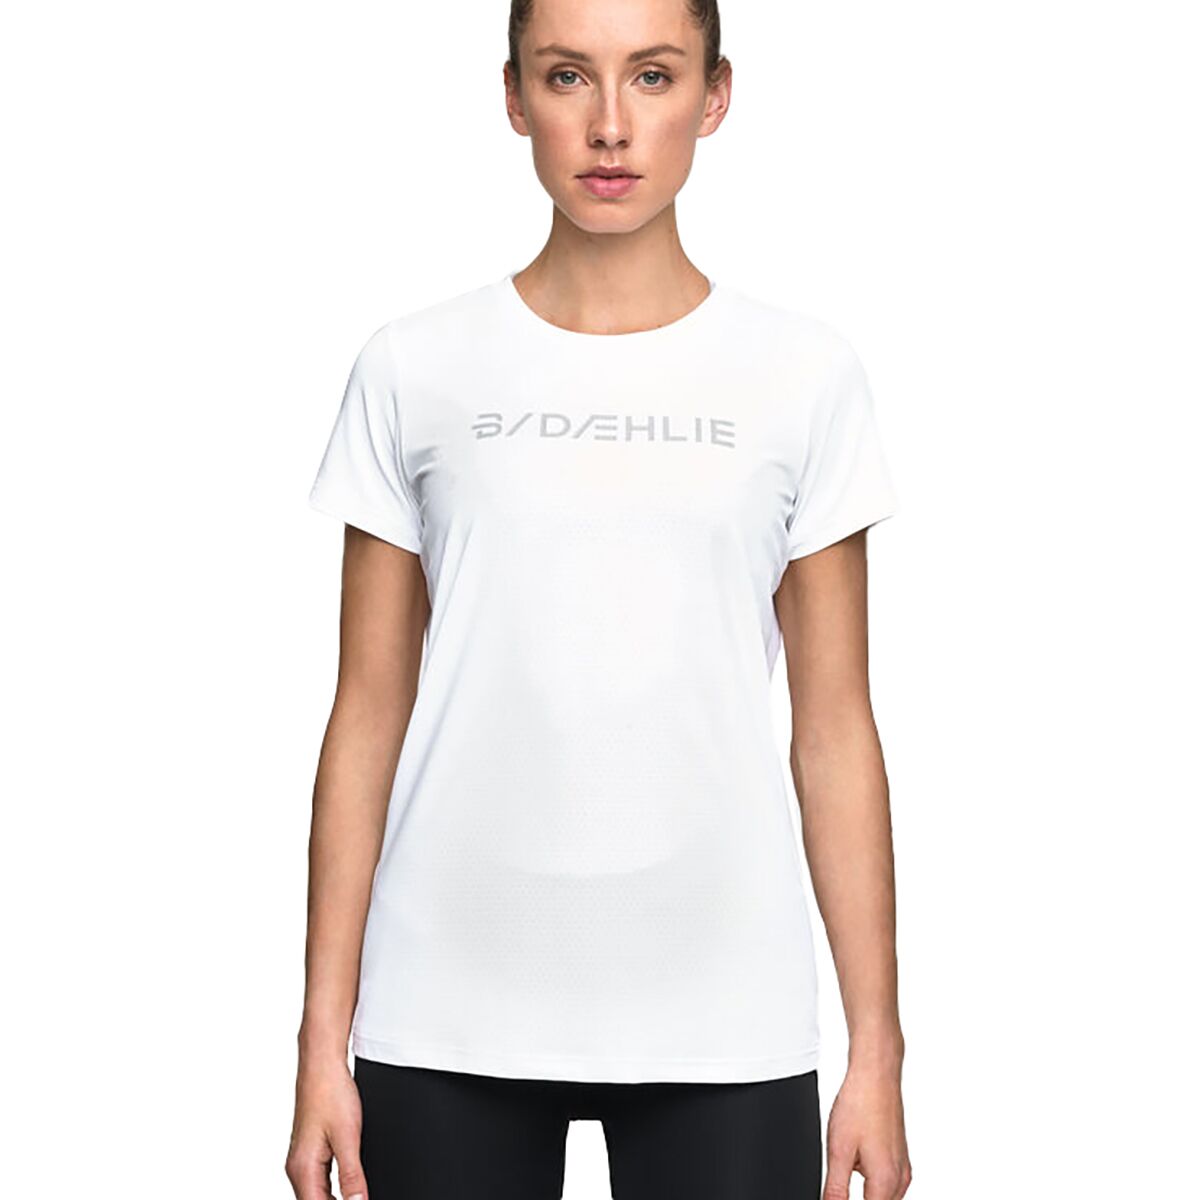 Bjorn Daehlie Focus T-Shirt - Women's